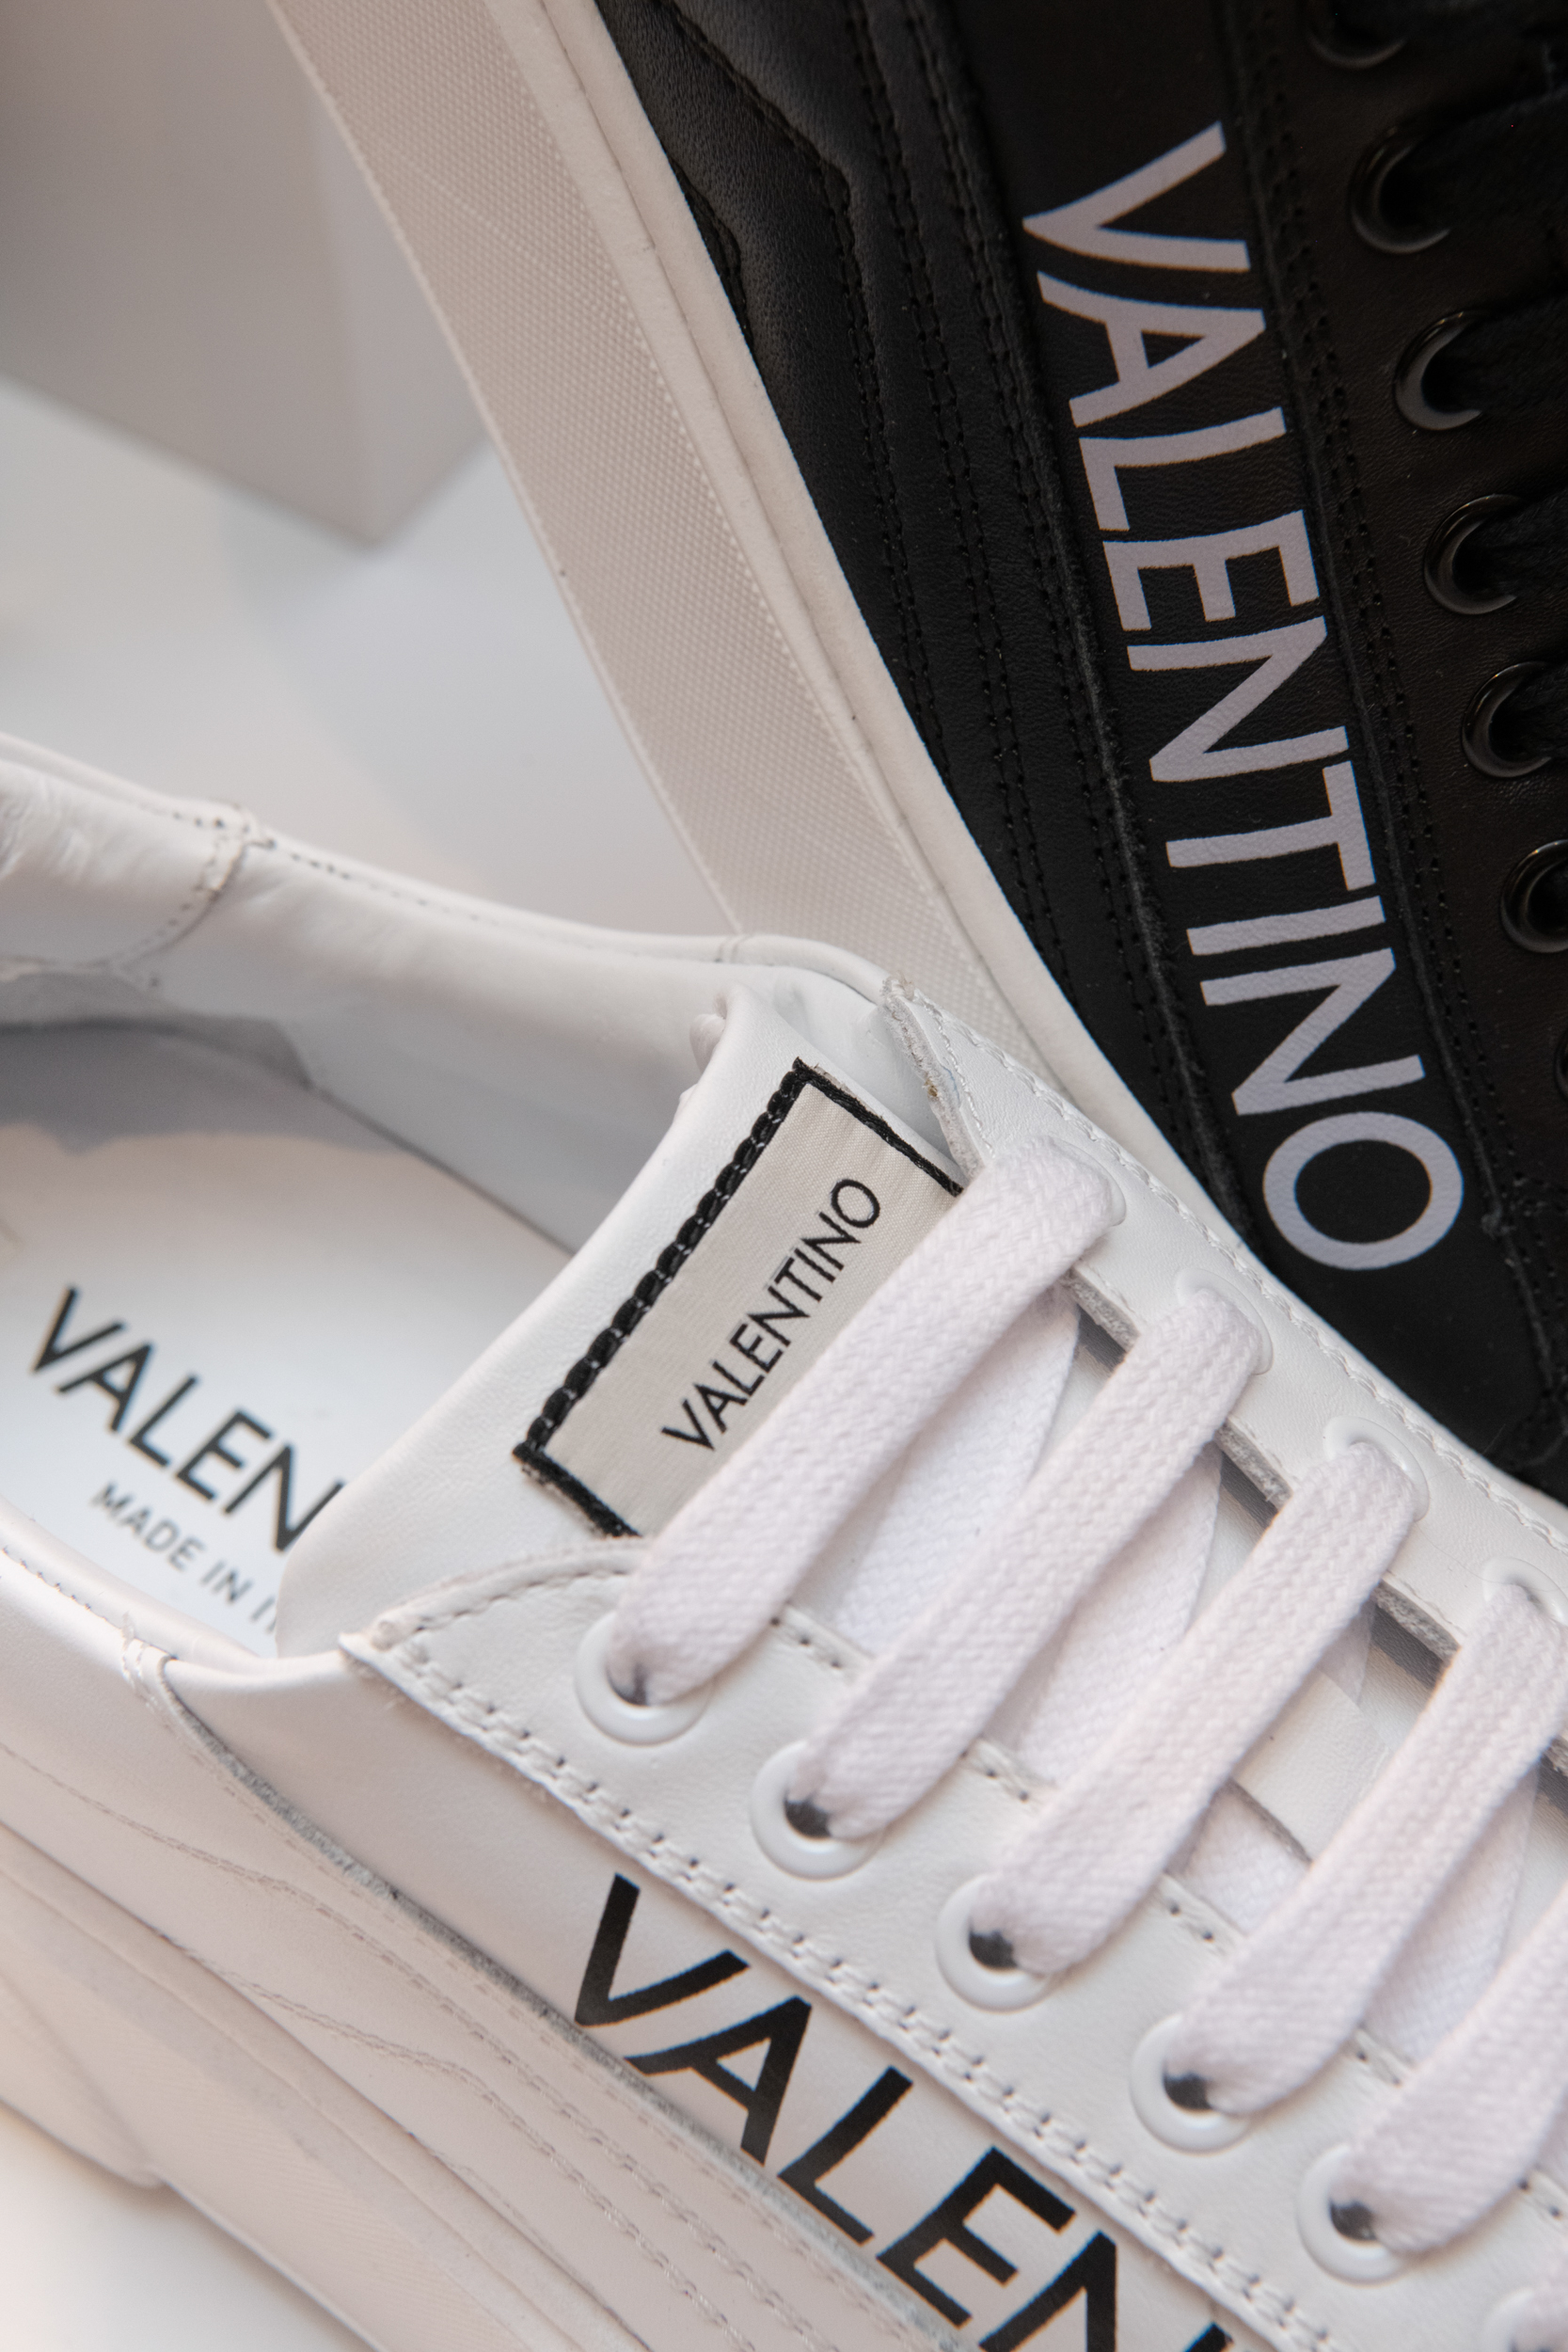 Valentino Shoes  Spring 2023 Fashion Show 